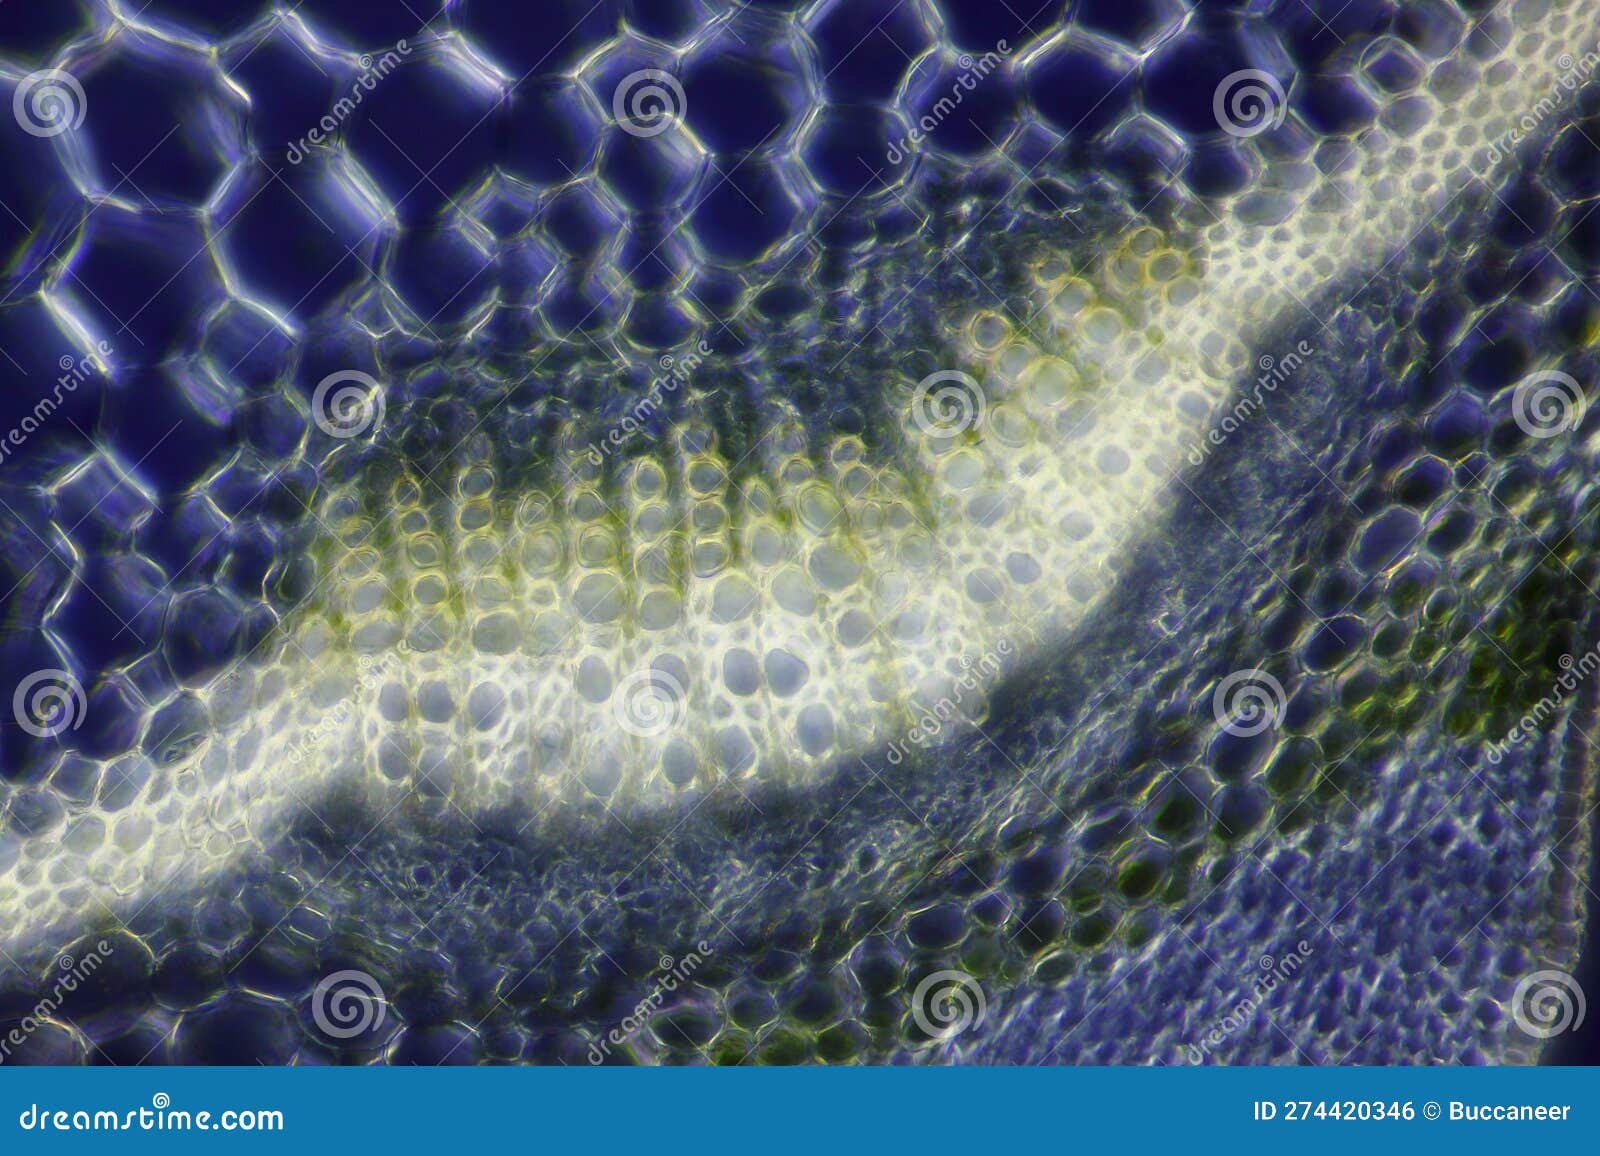 microscopic view of spurge (euphorbia sp.) vascular bundle